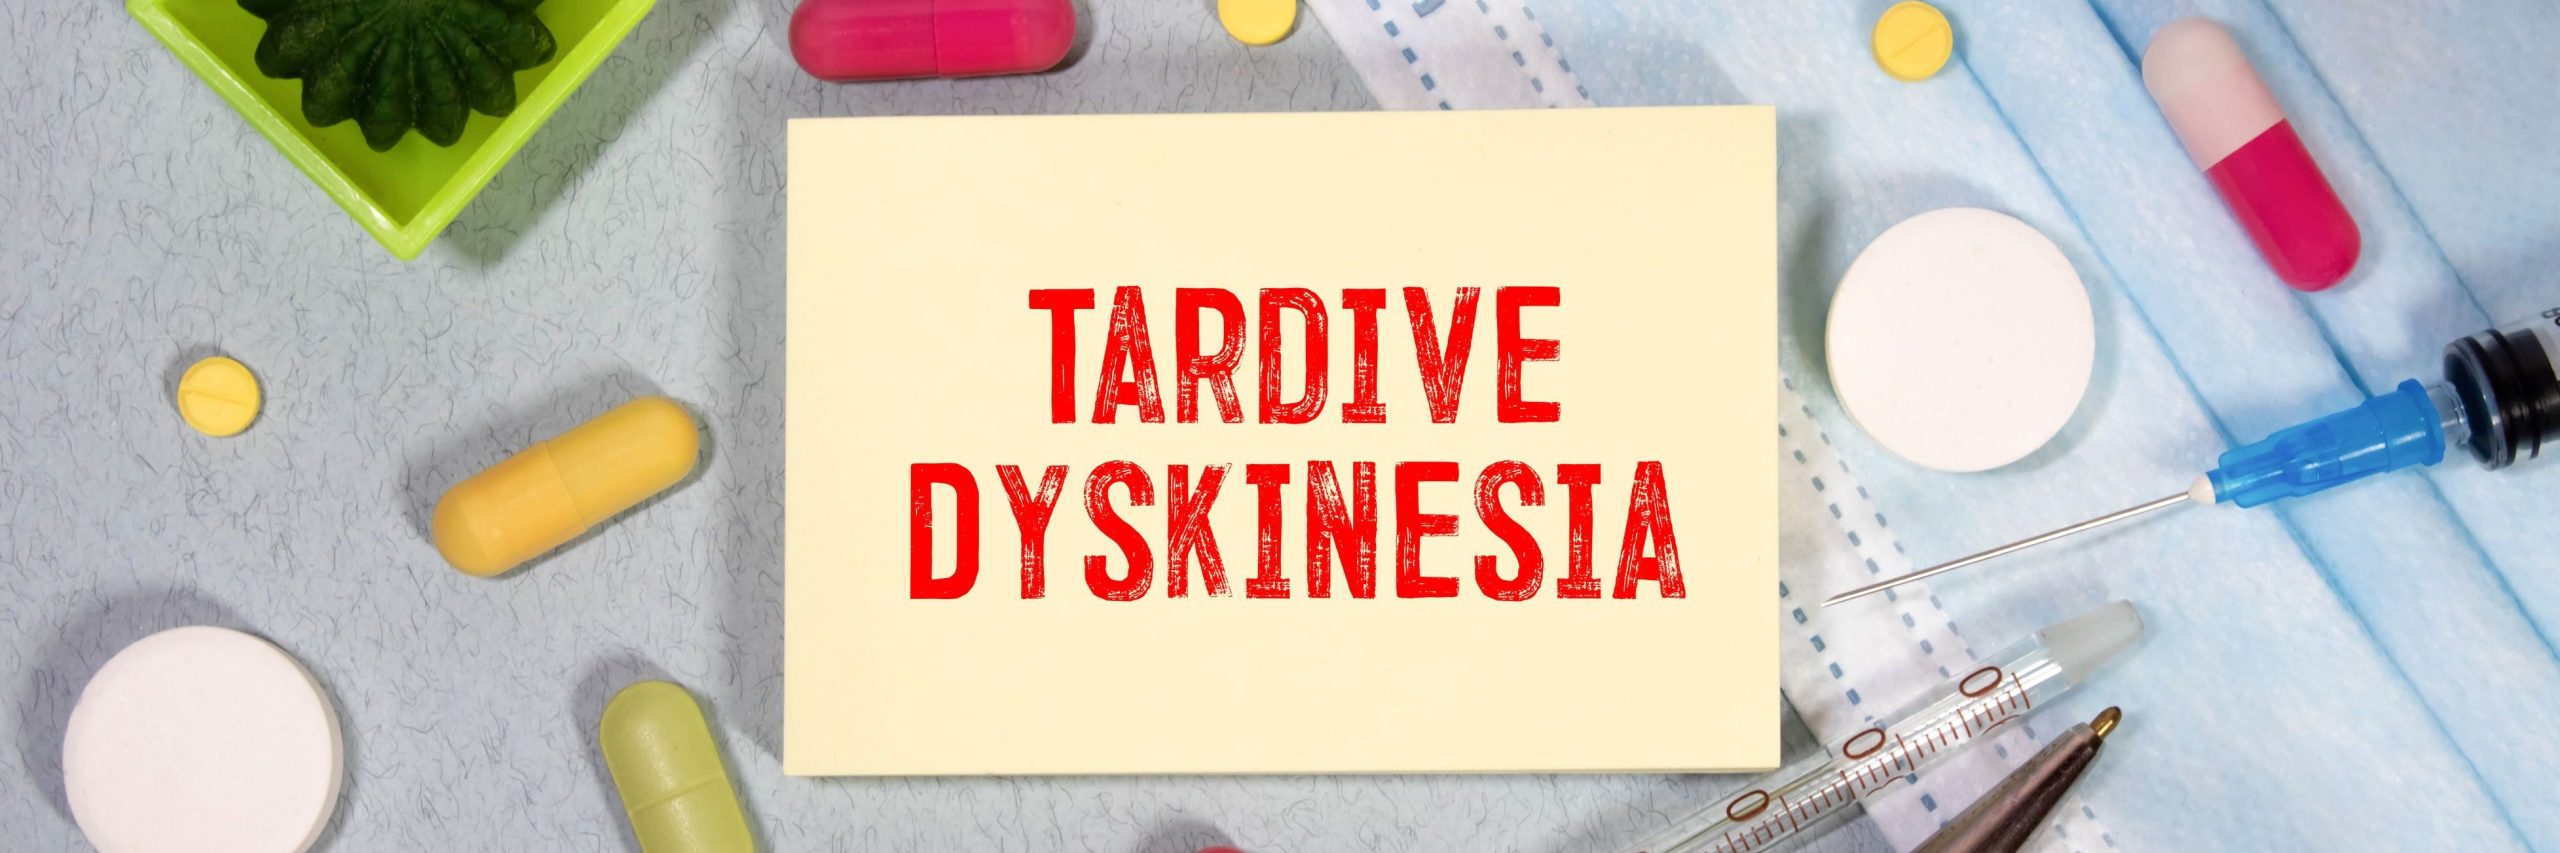 Strategies For Minimizing & Managing Tardive Dyskinesia